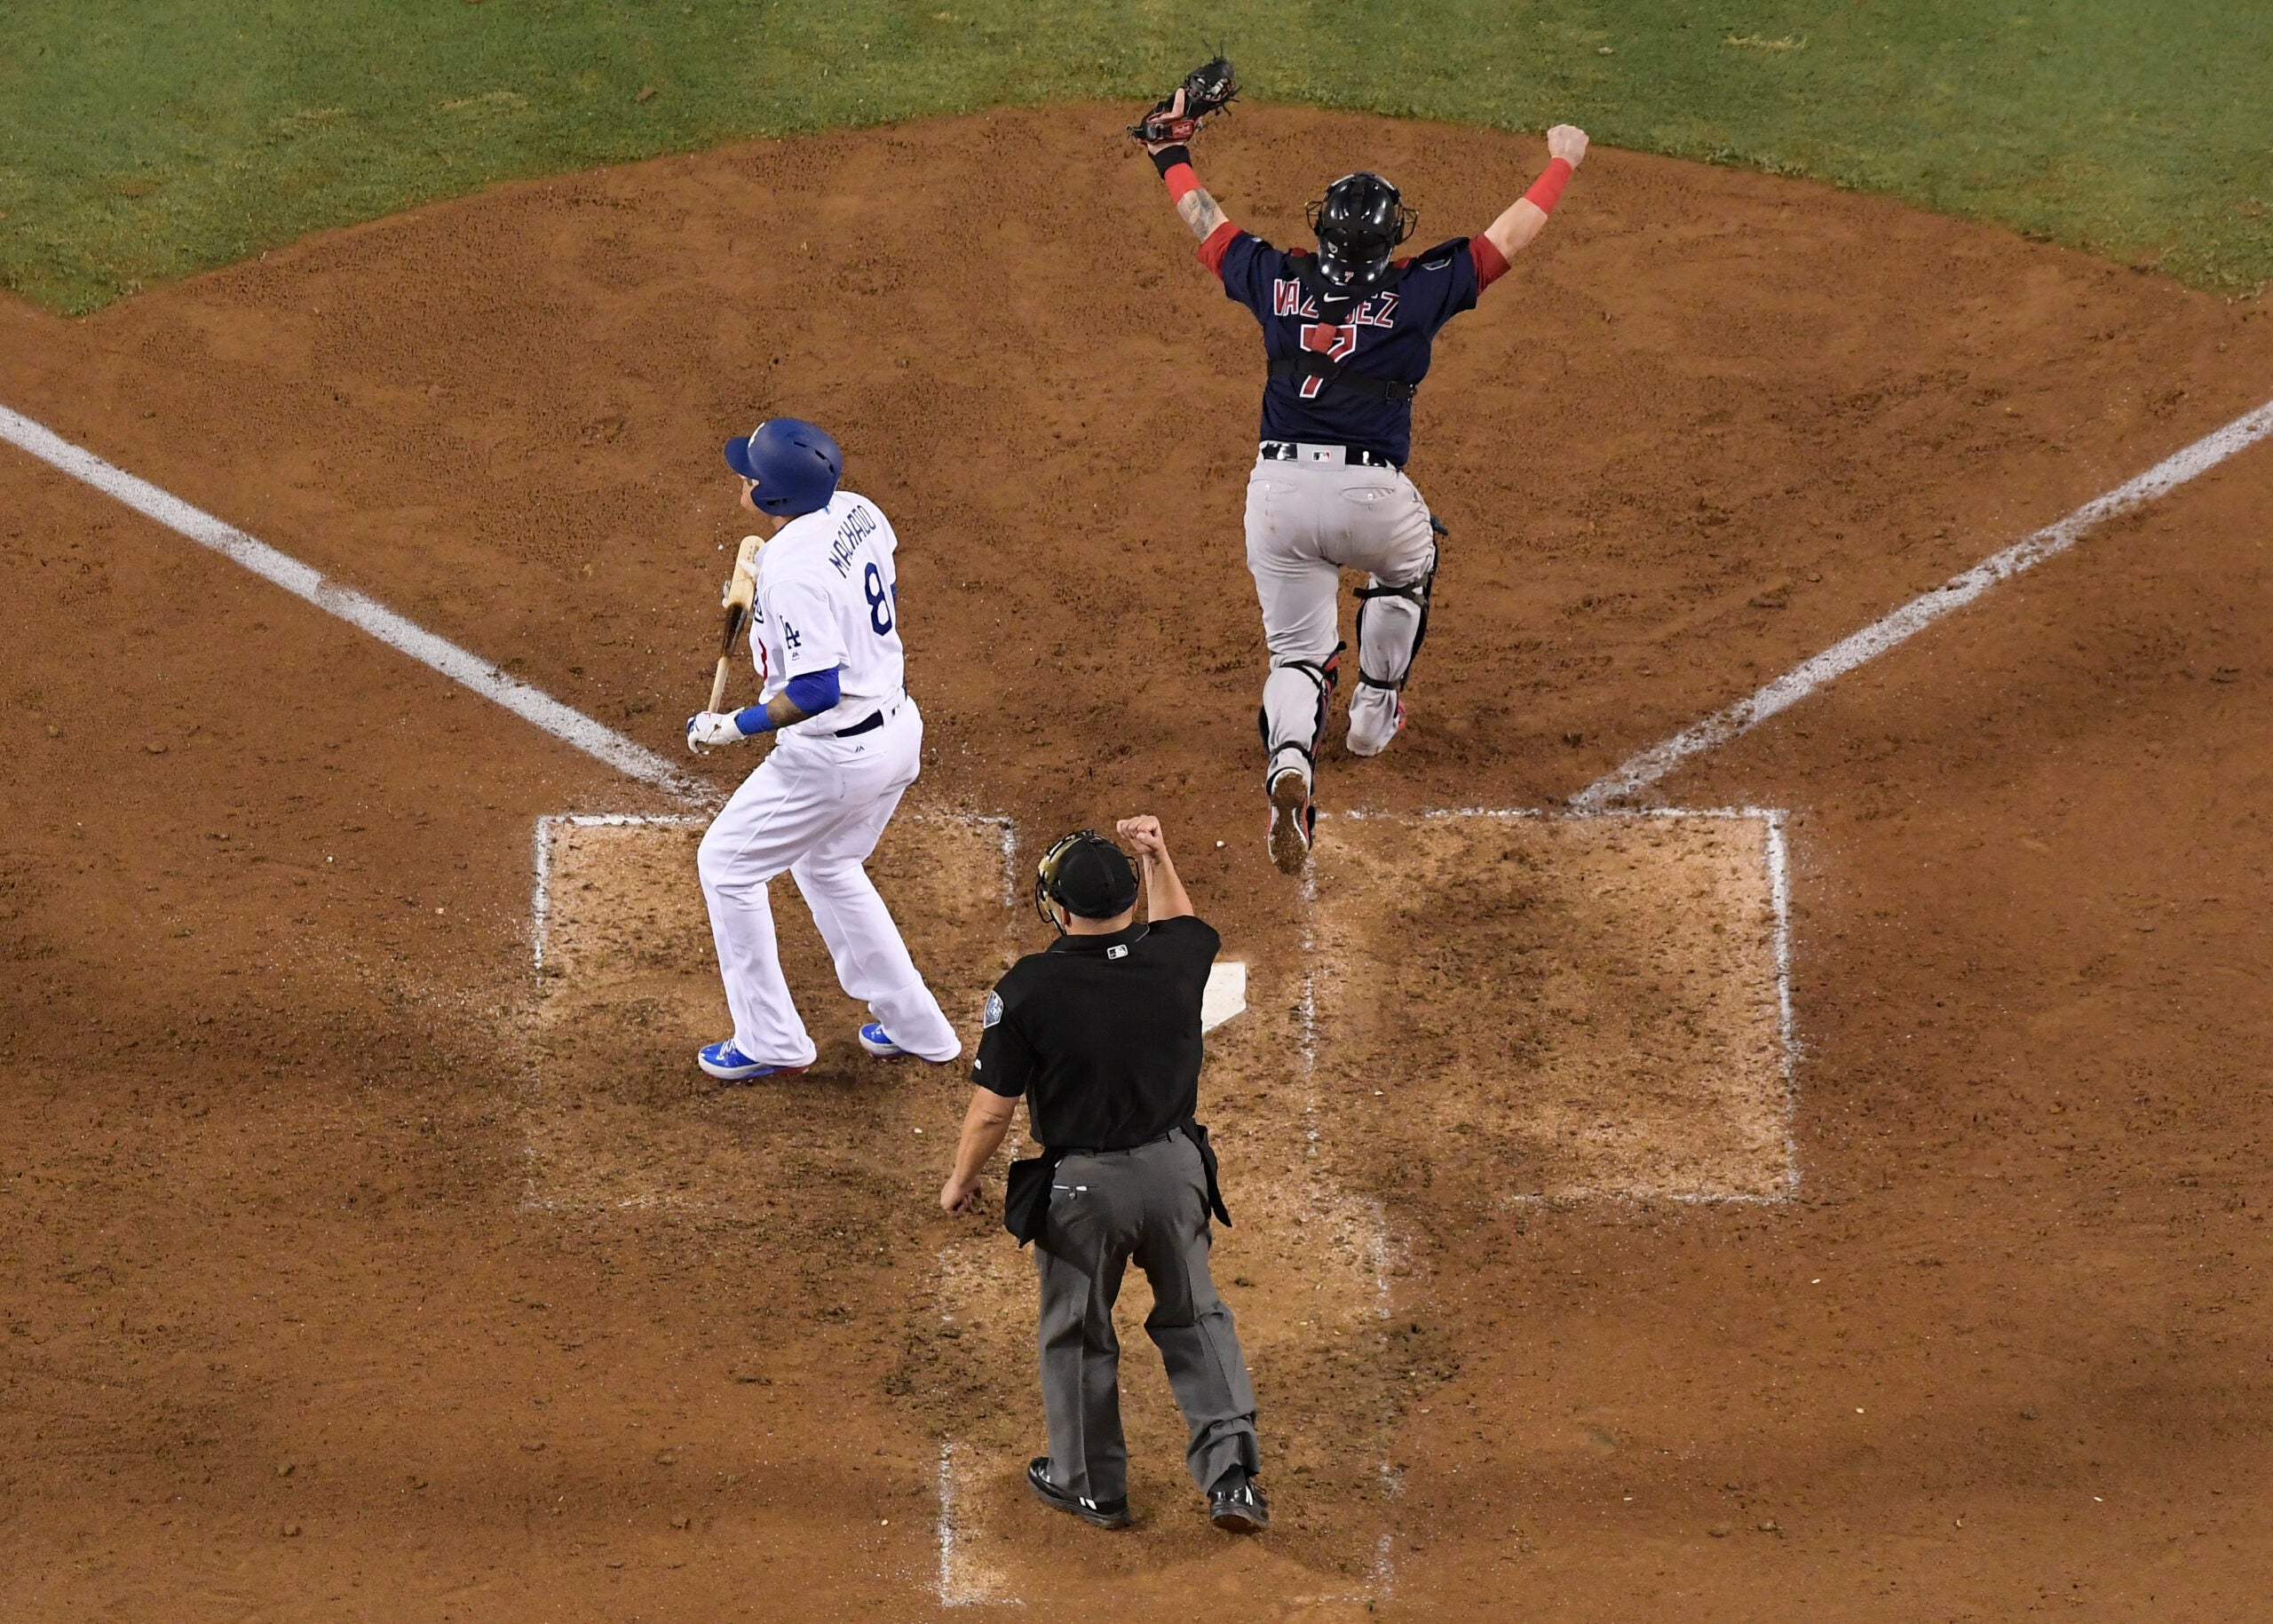 Charlie Baker mocked Manny Machados World Series-ending strikeout